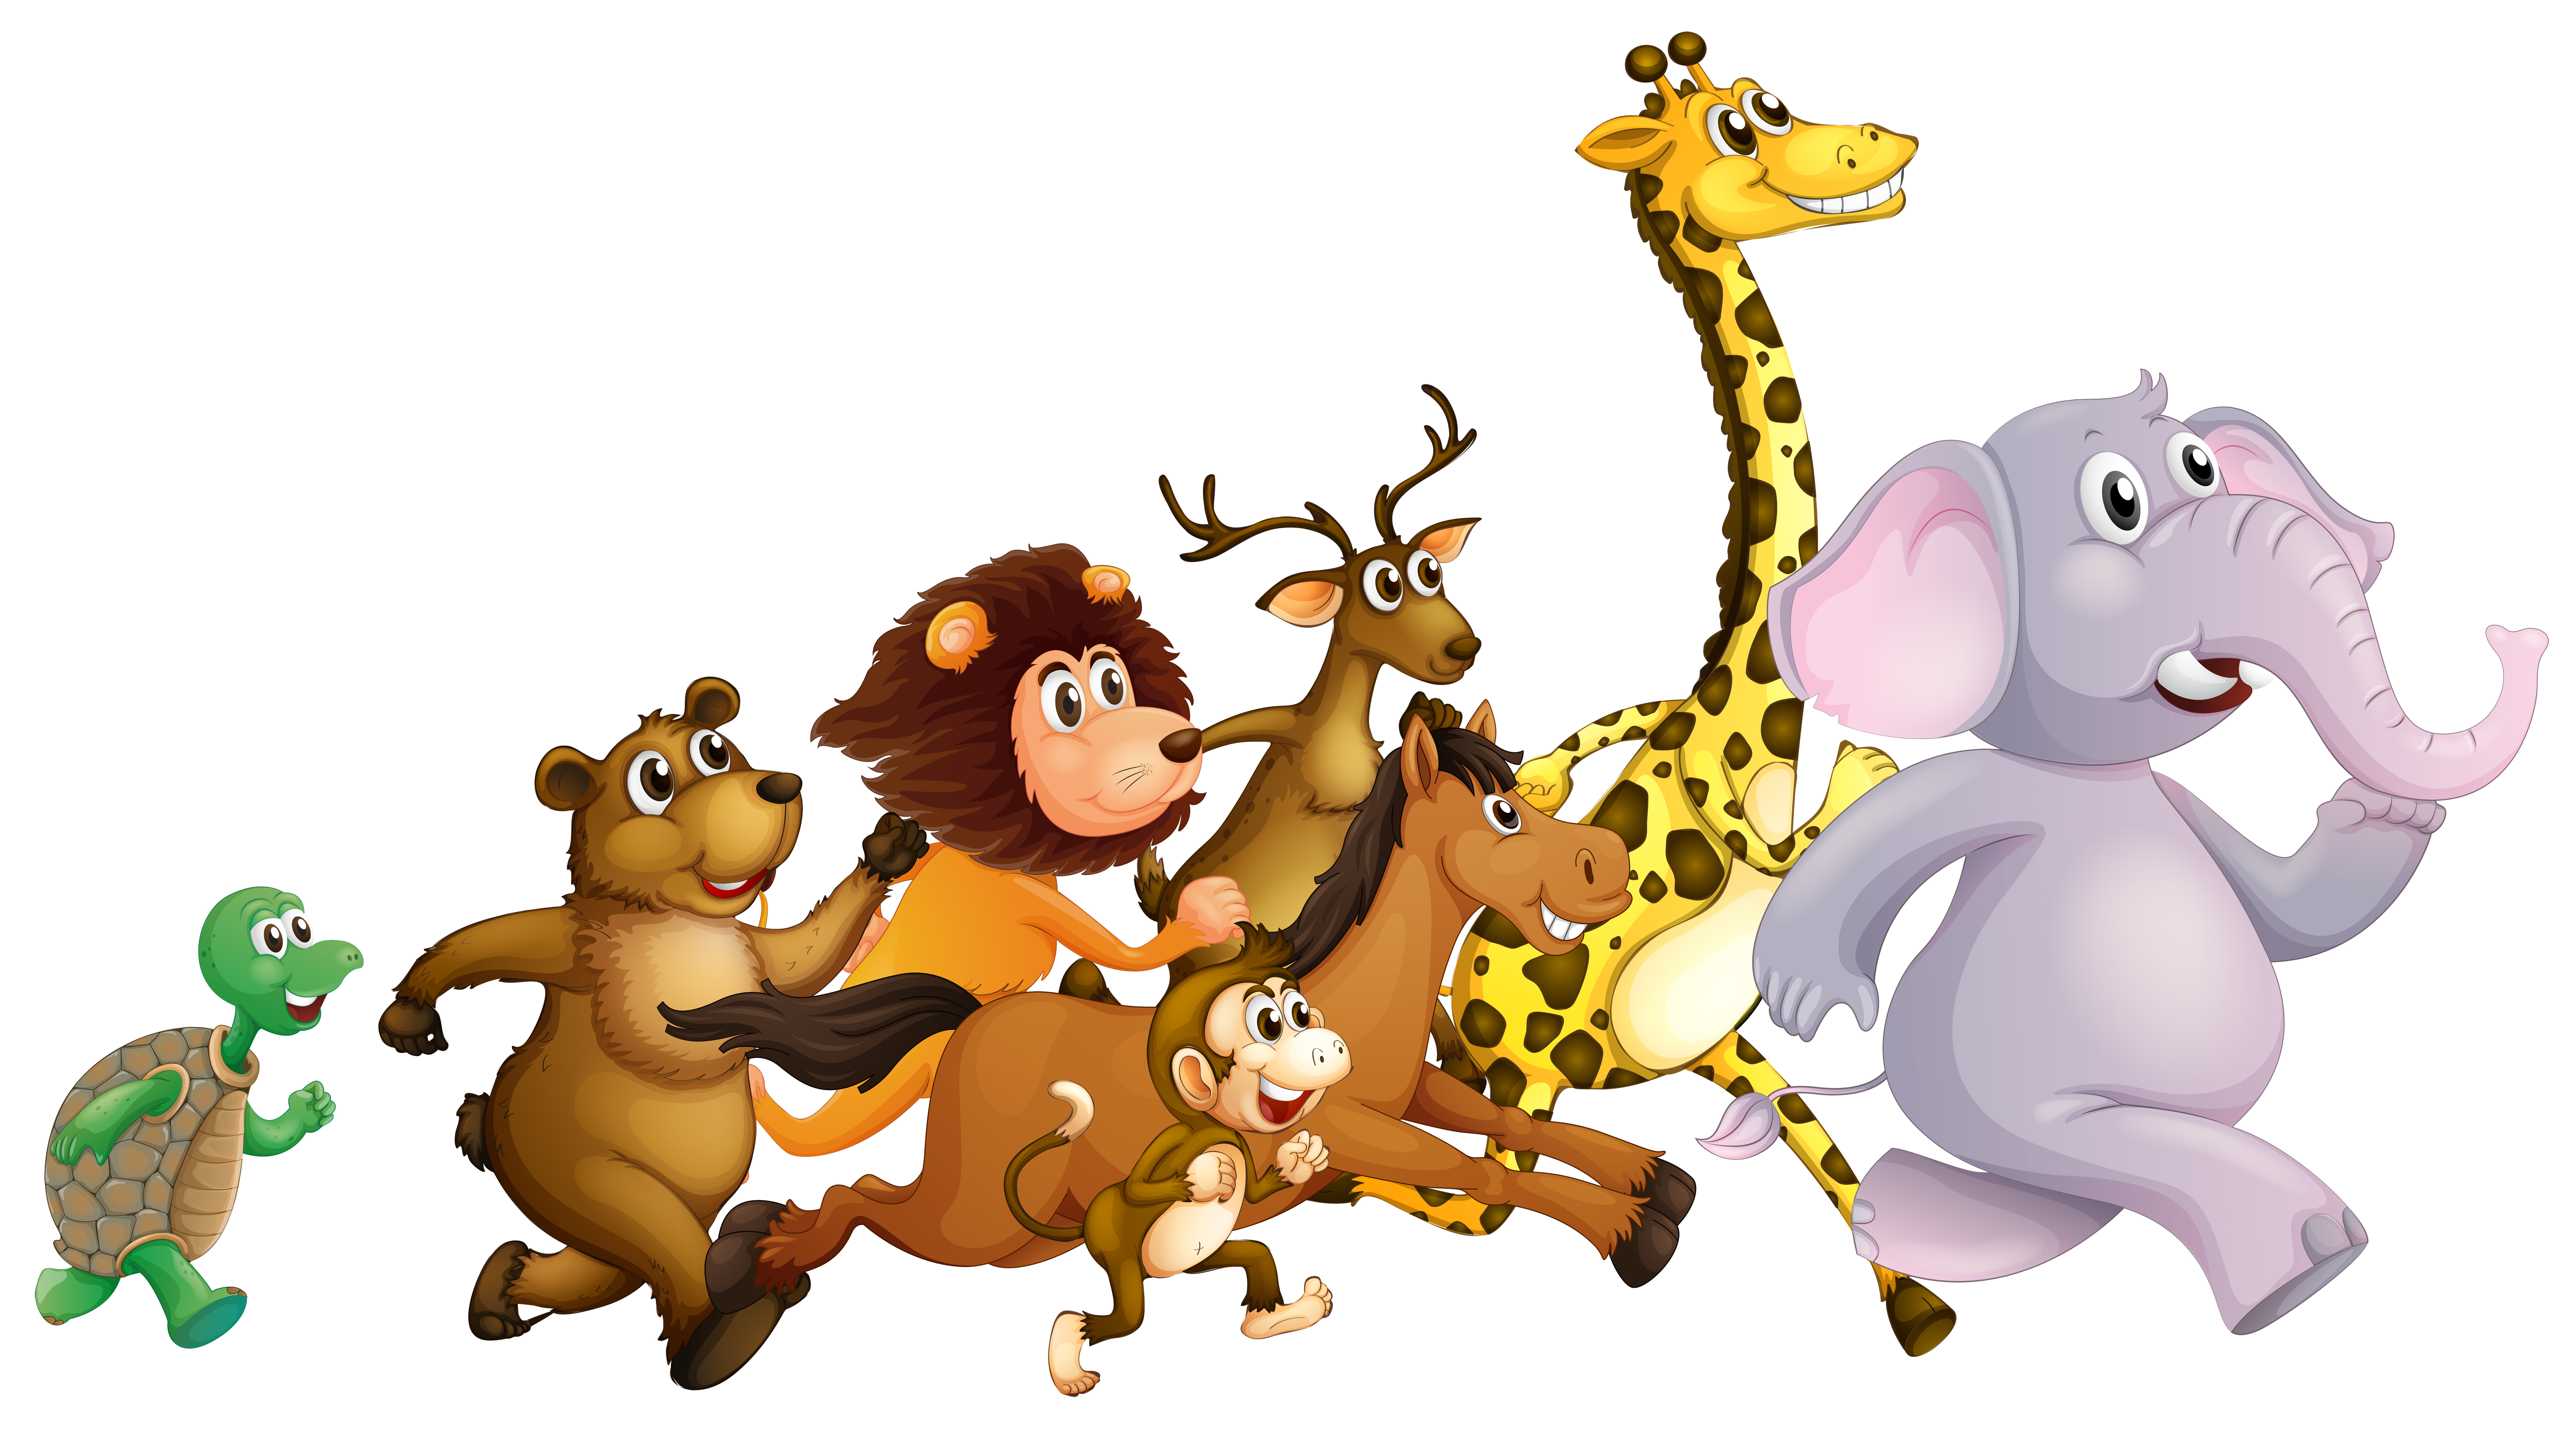 Wild animals running together - Download Free Vectors ...